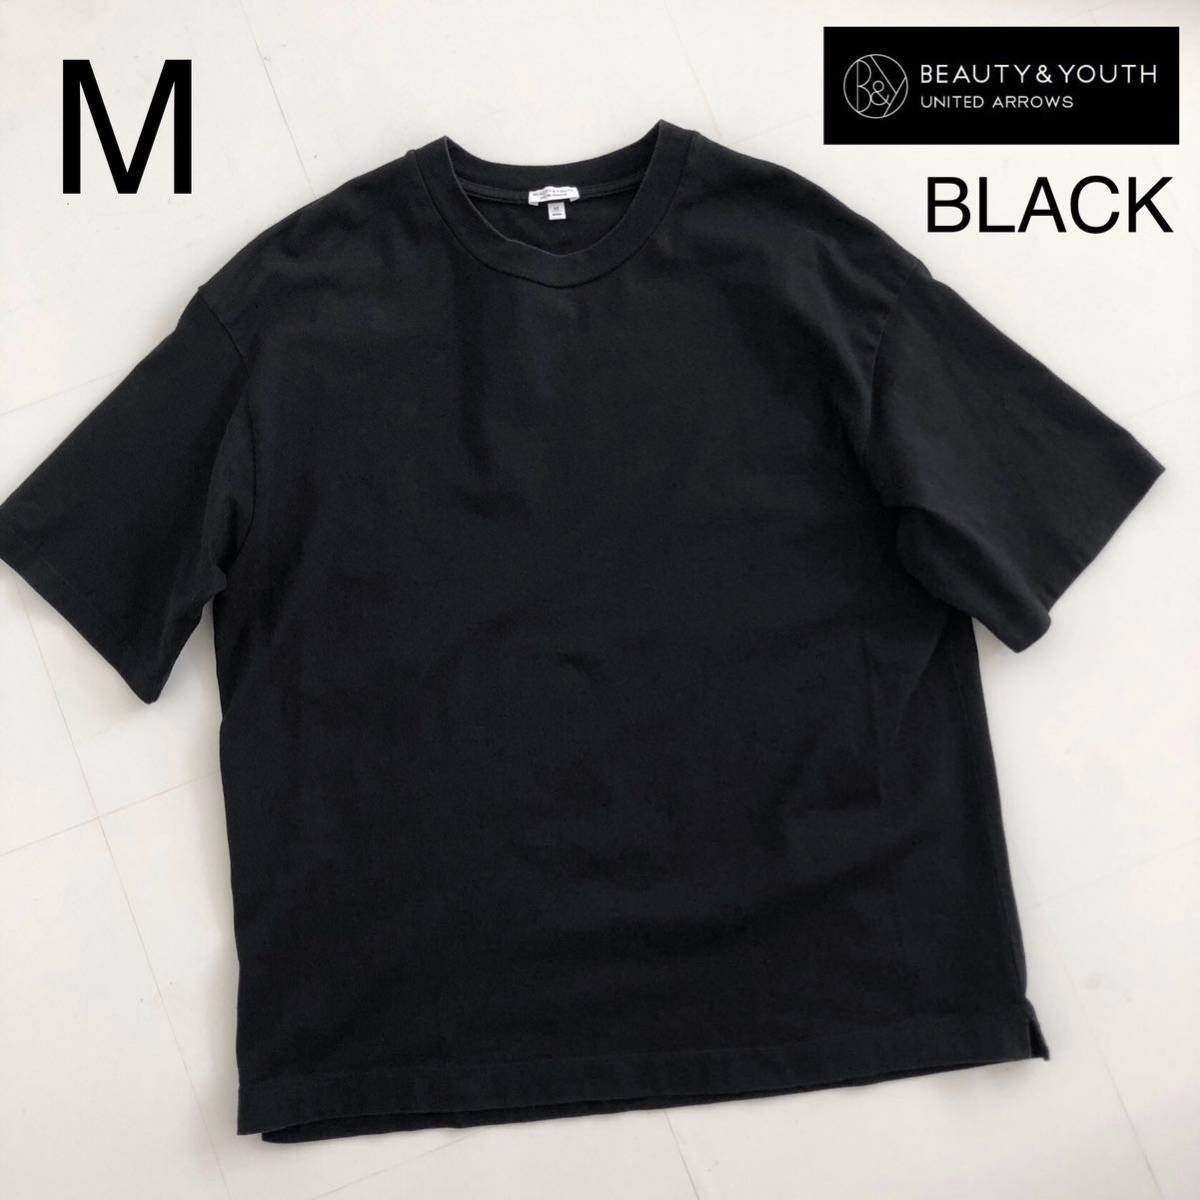 BEAUTY & YOUTH United Arrows oversize big Silhouette T-shirt M black black B&Y beauty & Youth UNITED ARROWS